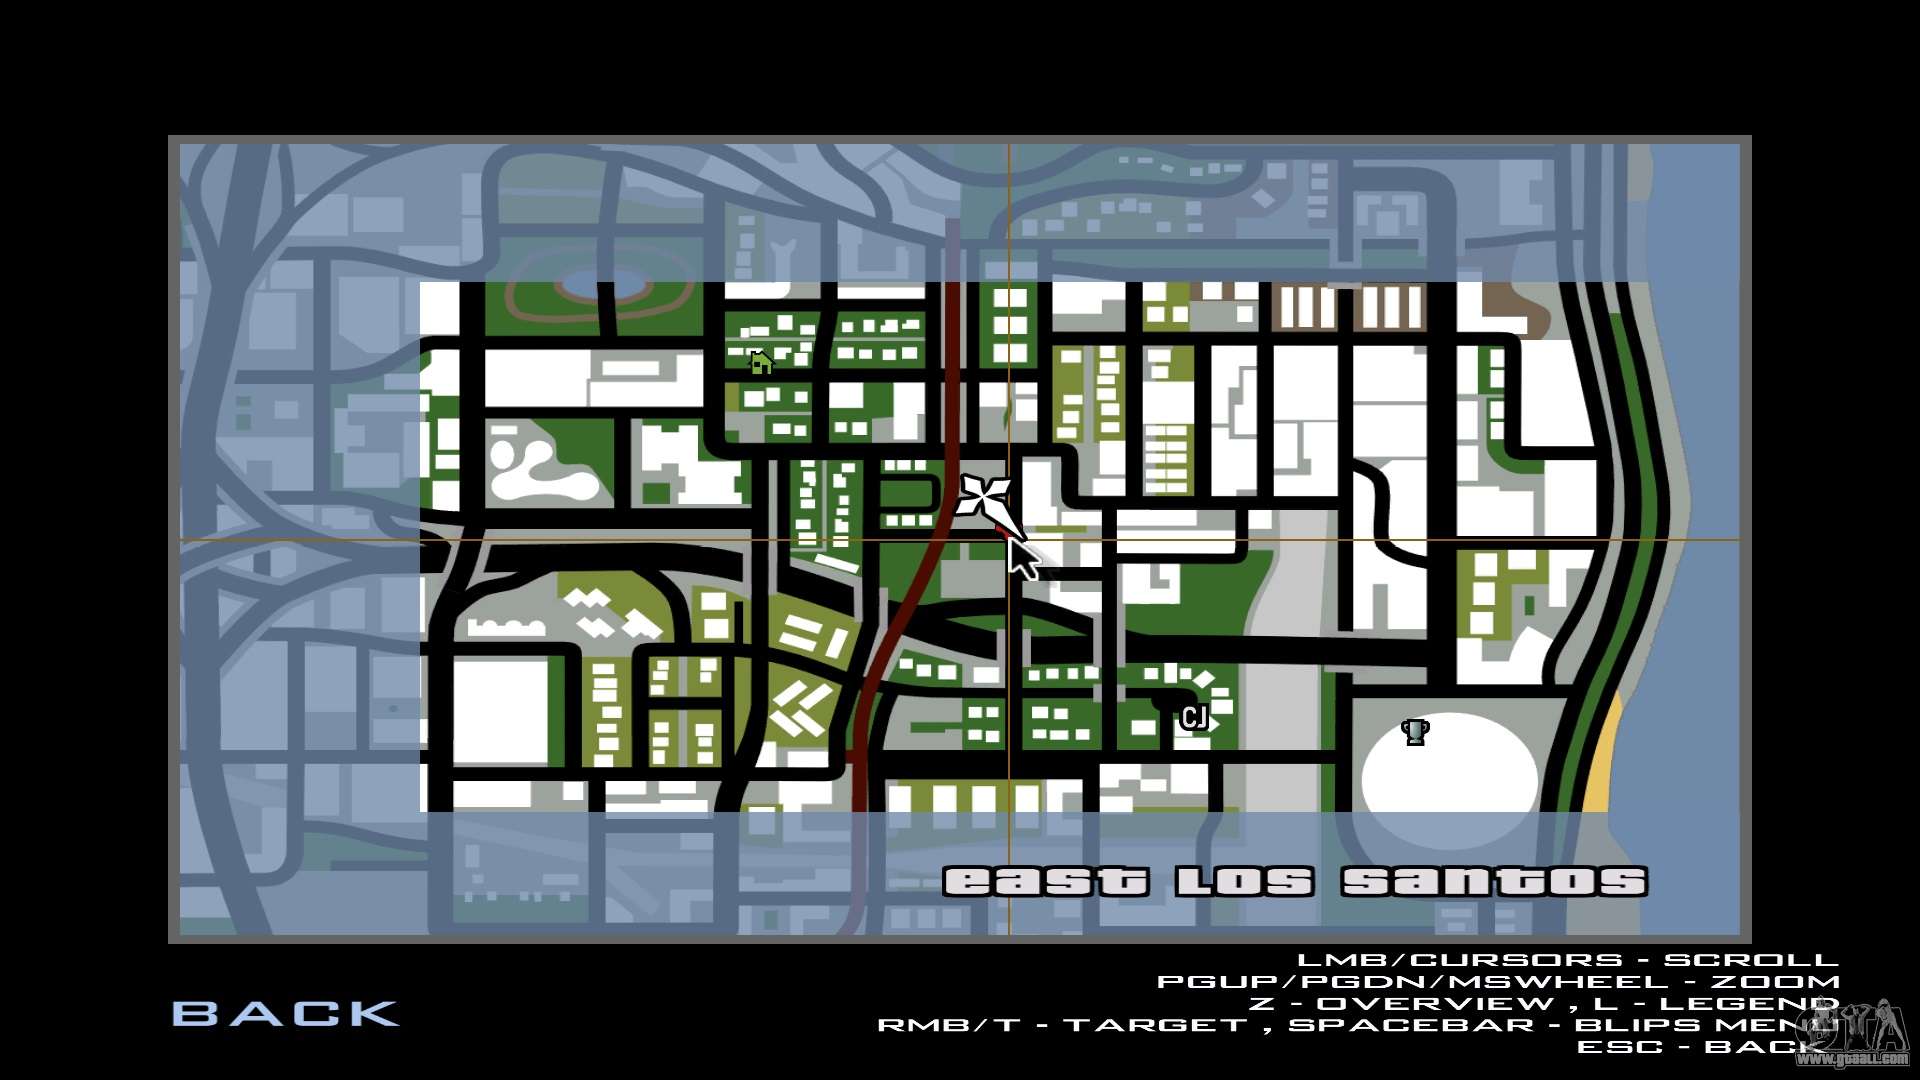 Scroll Paintings Video Games The Map Of Gta San Andreas : Los